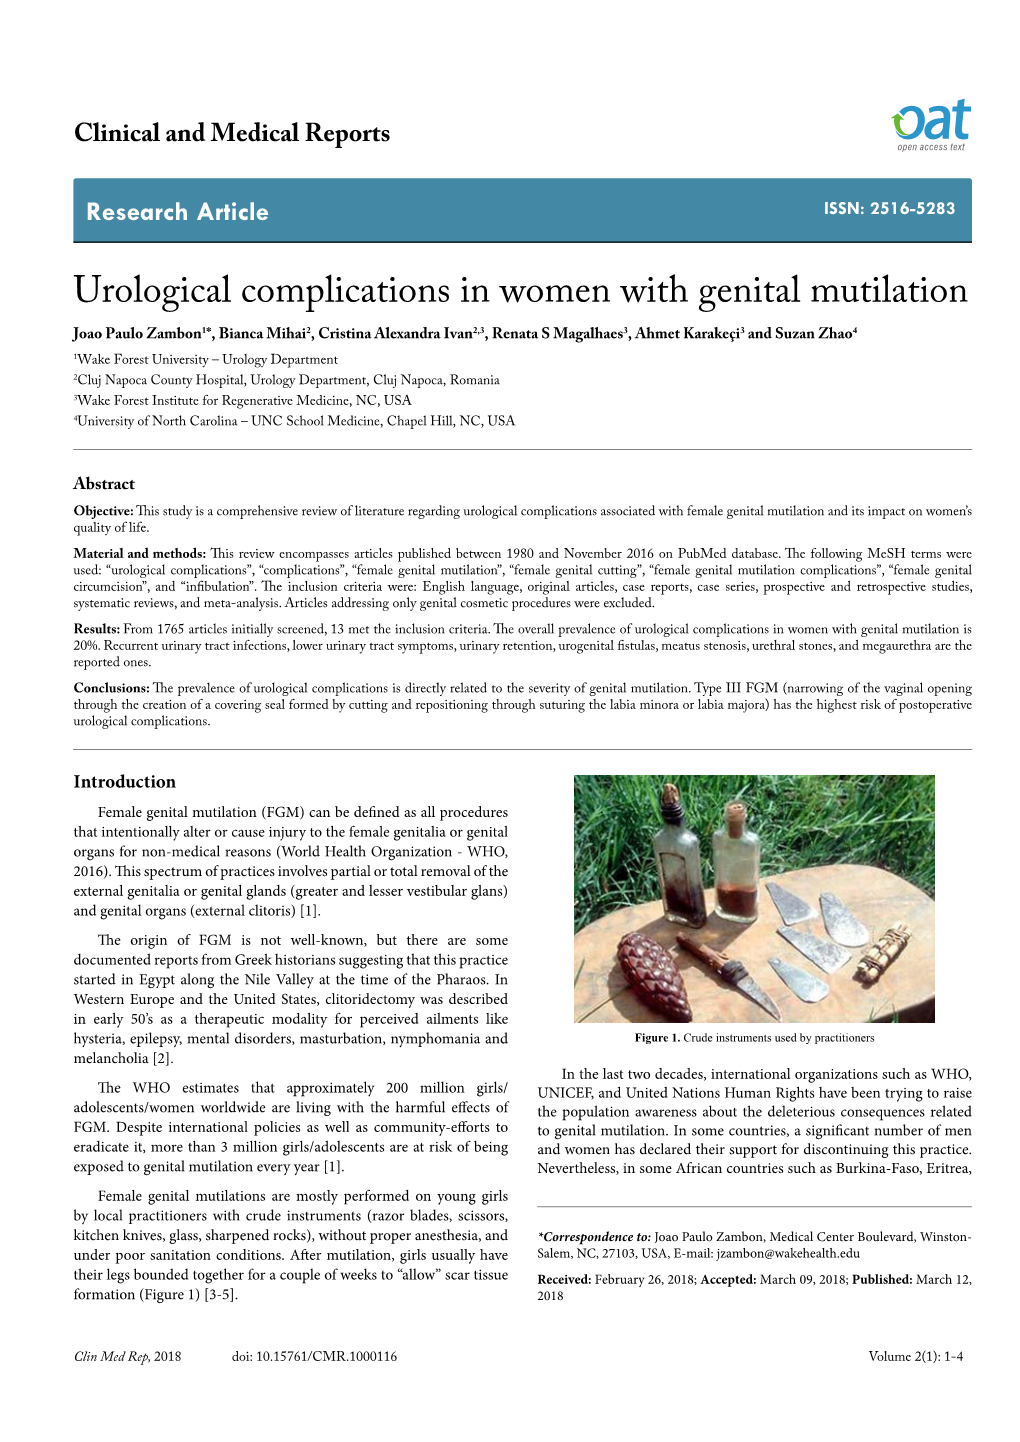 Urological Complications in Women with Genital Mutilation